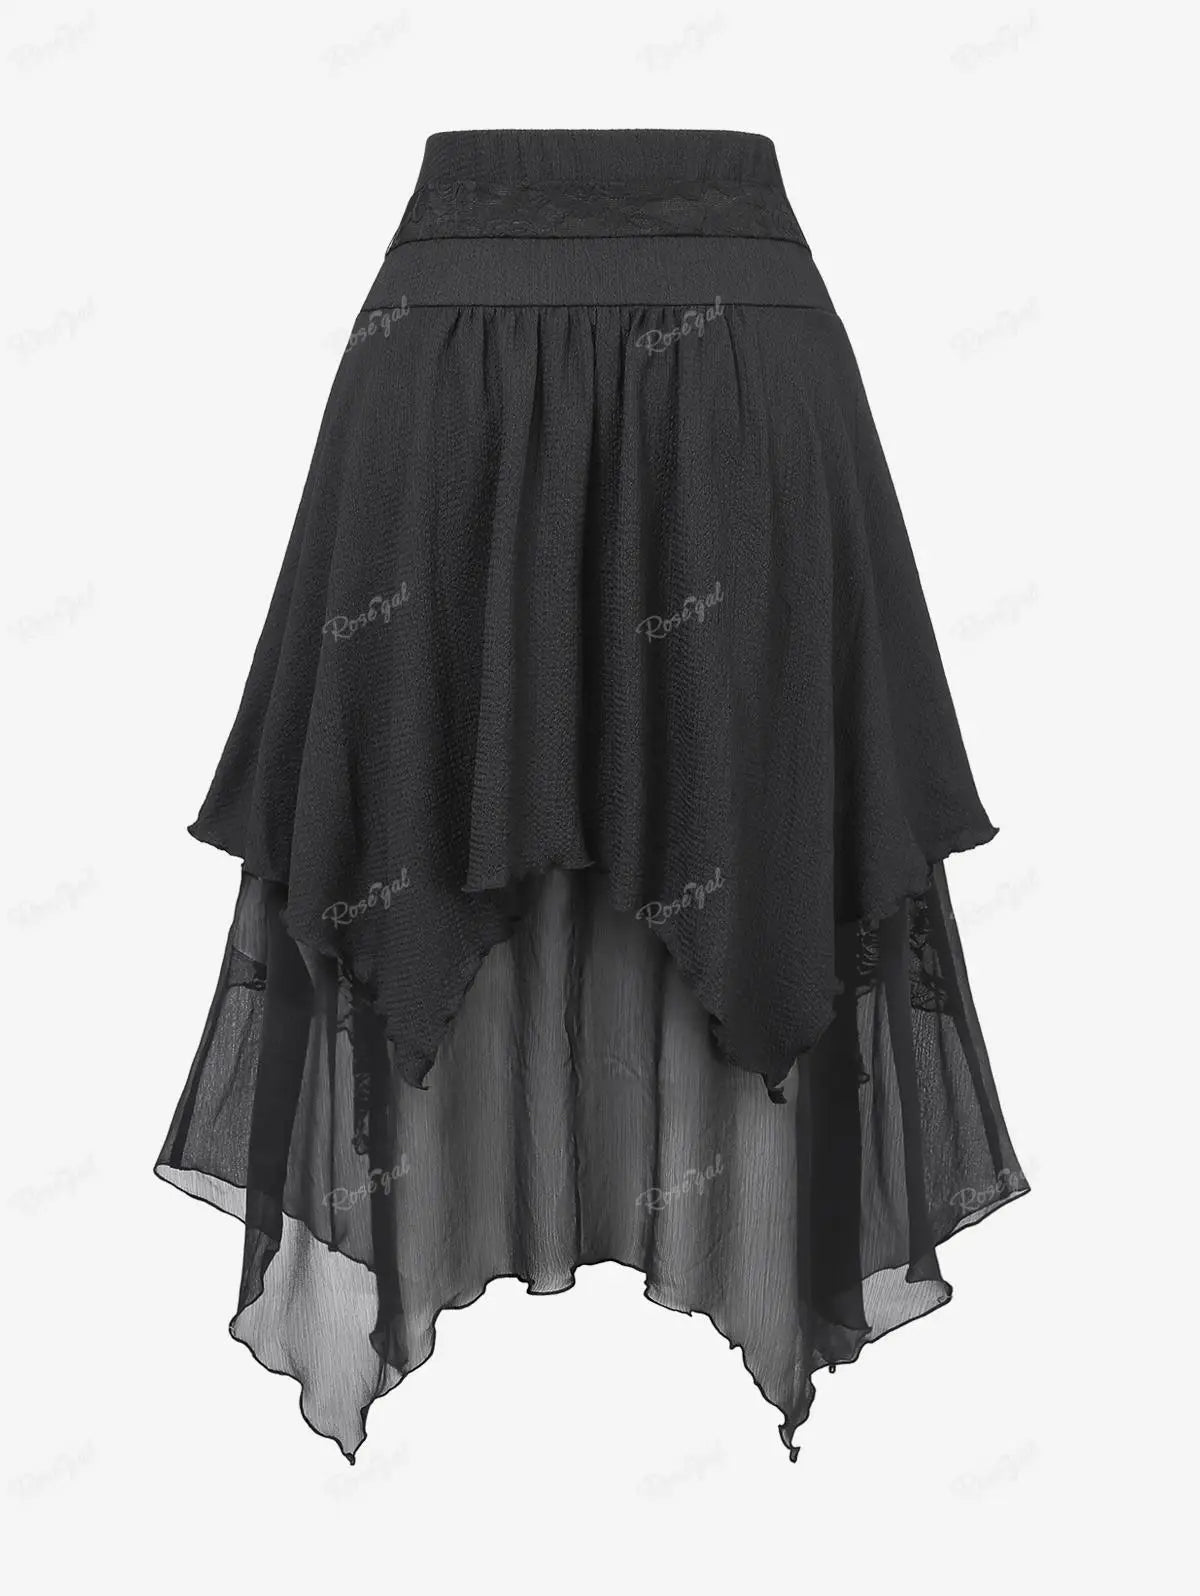 ROSEGAL Plus Size Black Floral Lace Ruffle Skirt - Asymmetrical Tie Waist Layered Skirt for Women